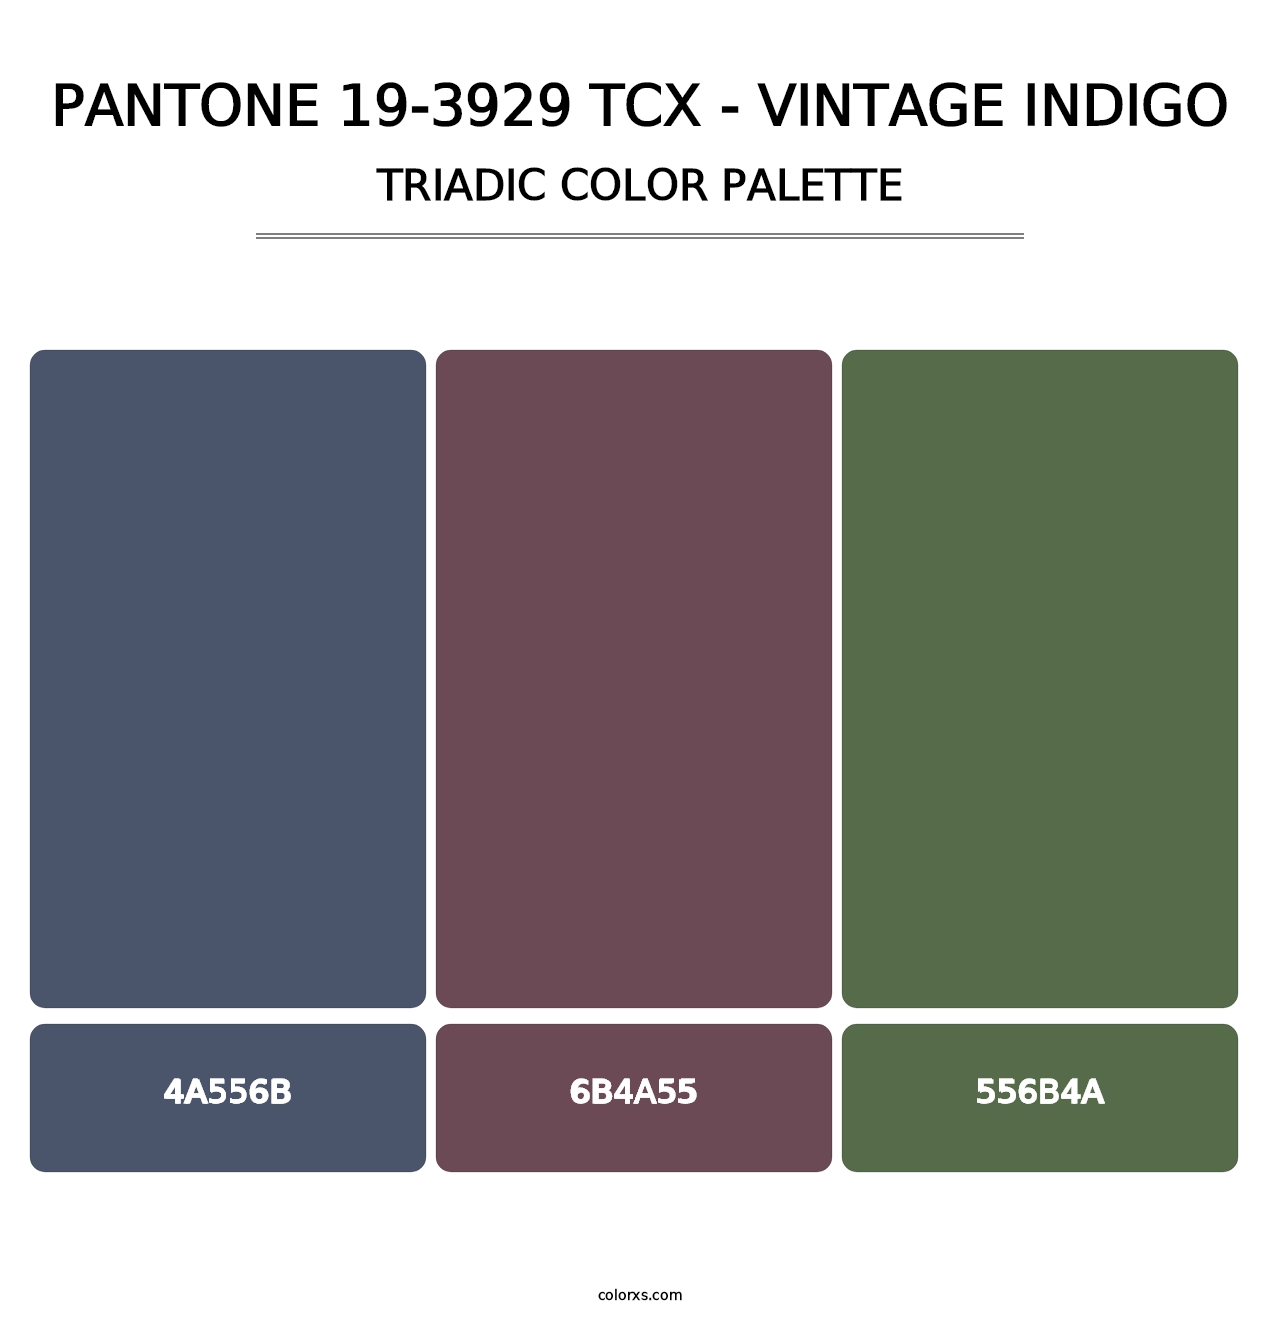 PANTONE 19-3929 TCX - Vintage Indigo - Triadic Color Palette